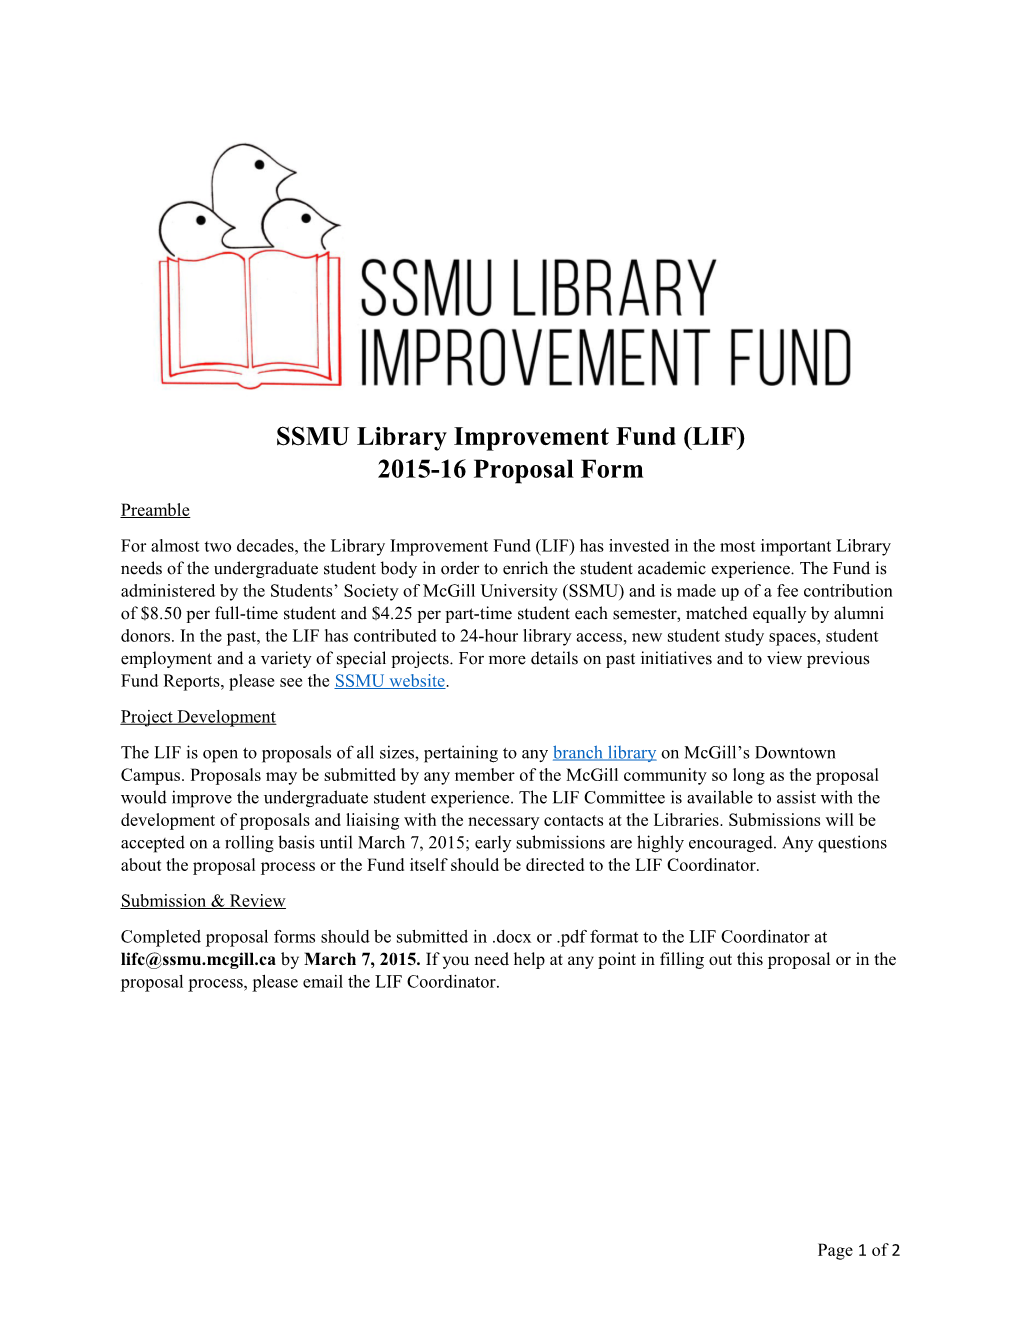 SSMU Library Improvement Fund (LIF) 2015-16 Proposal Form